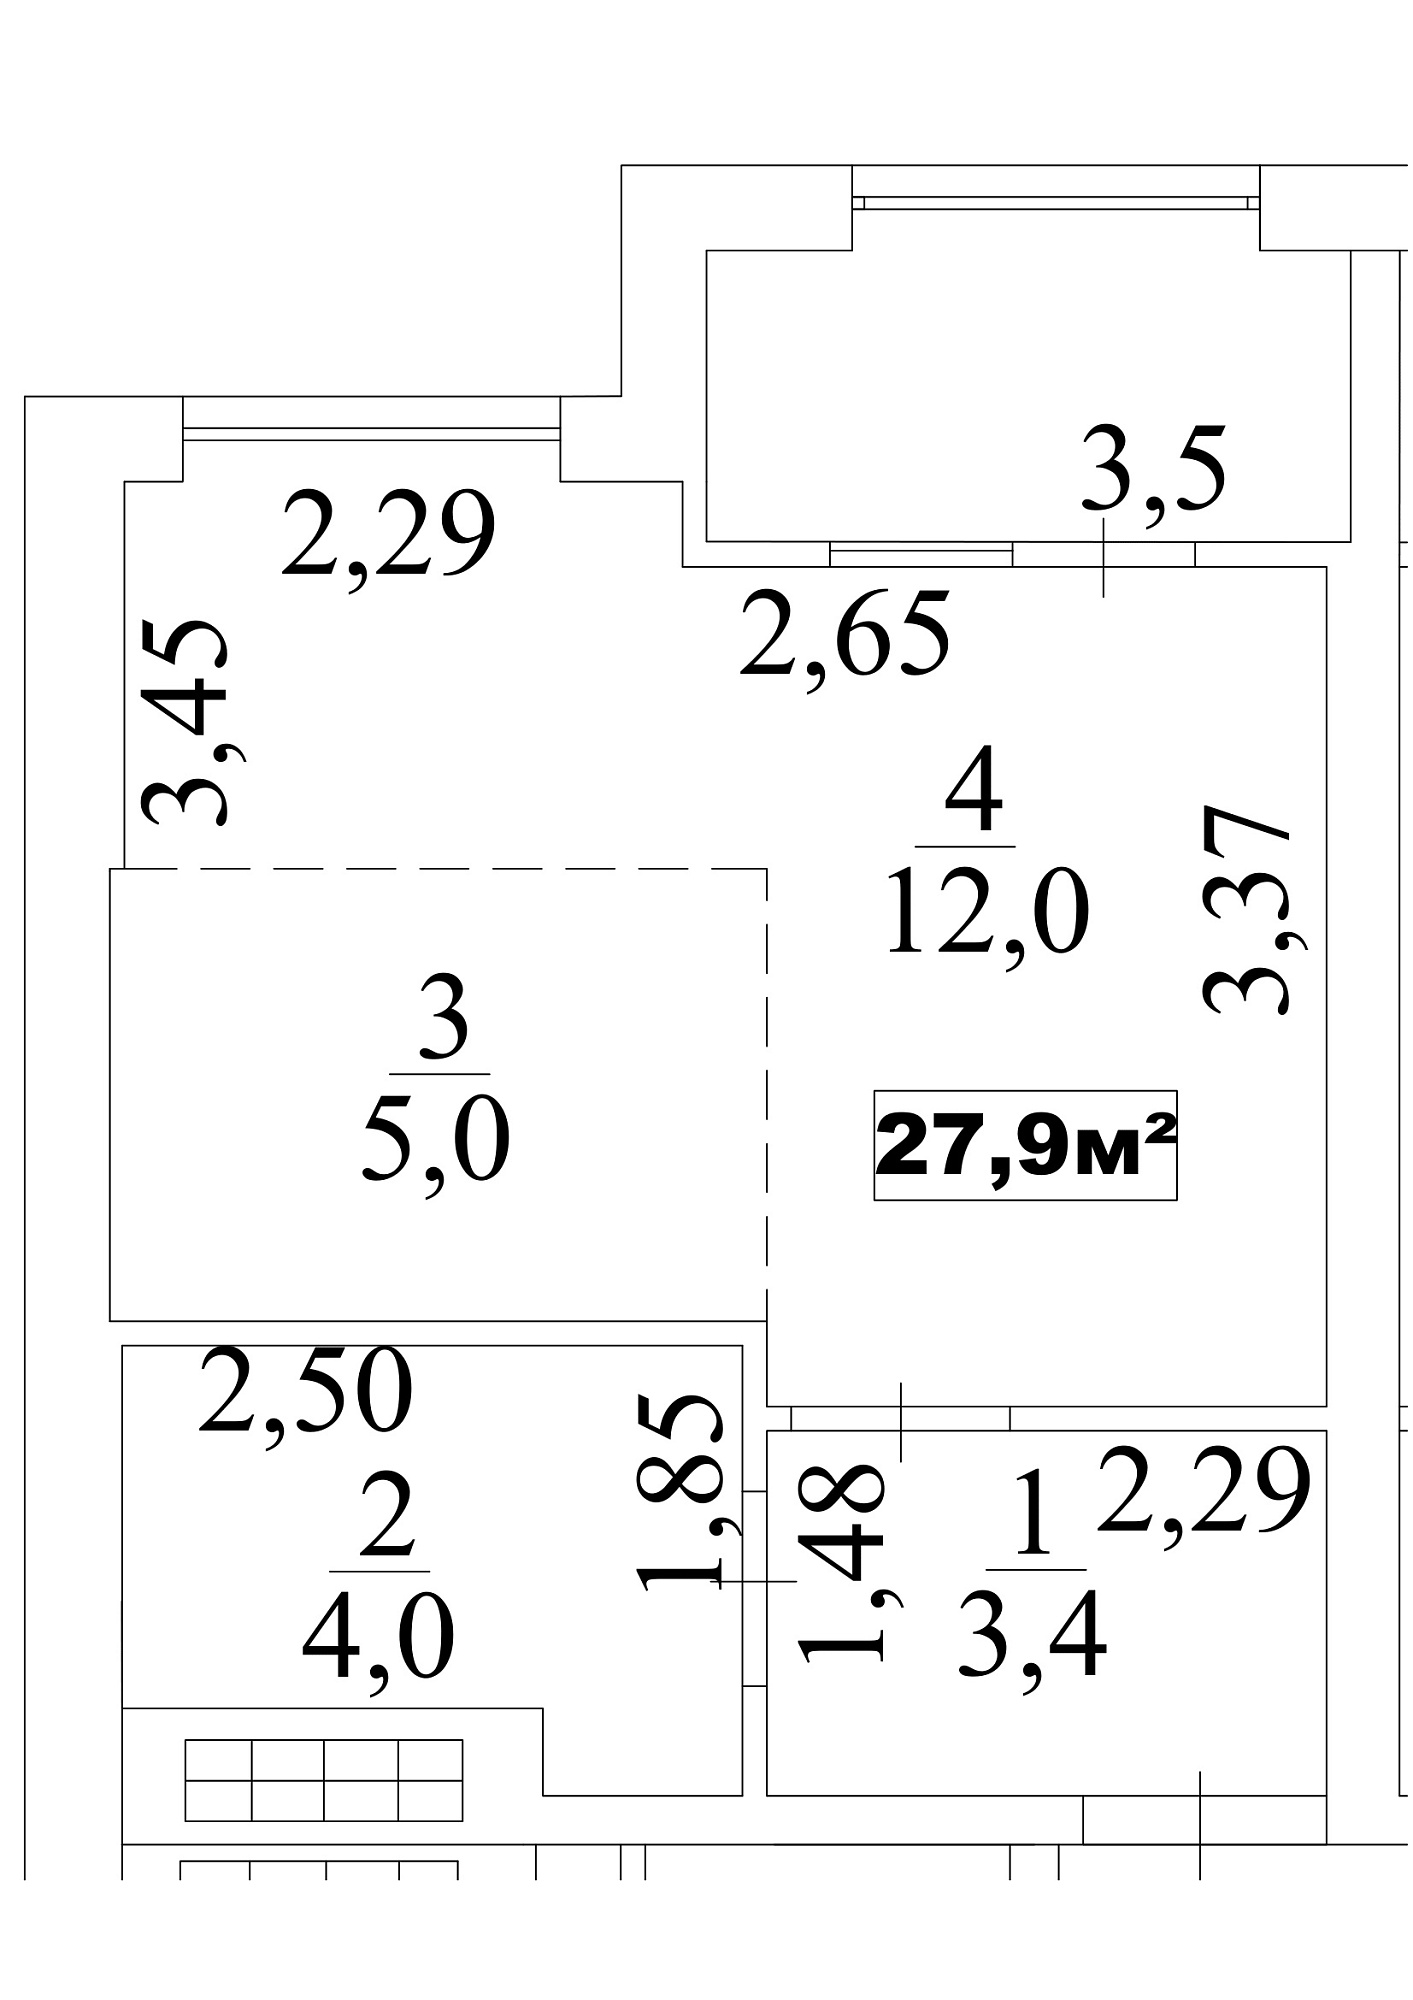 Планировка Smart-квартира площей 27.9м2, AB-10-07/0057б.